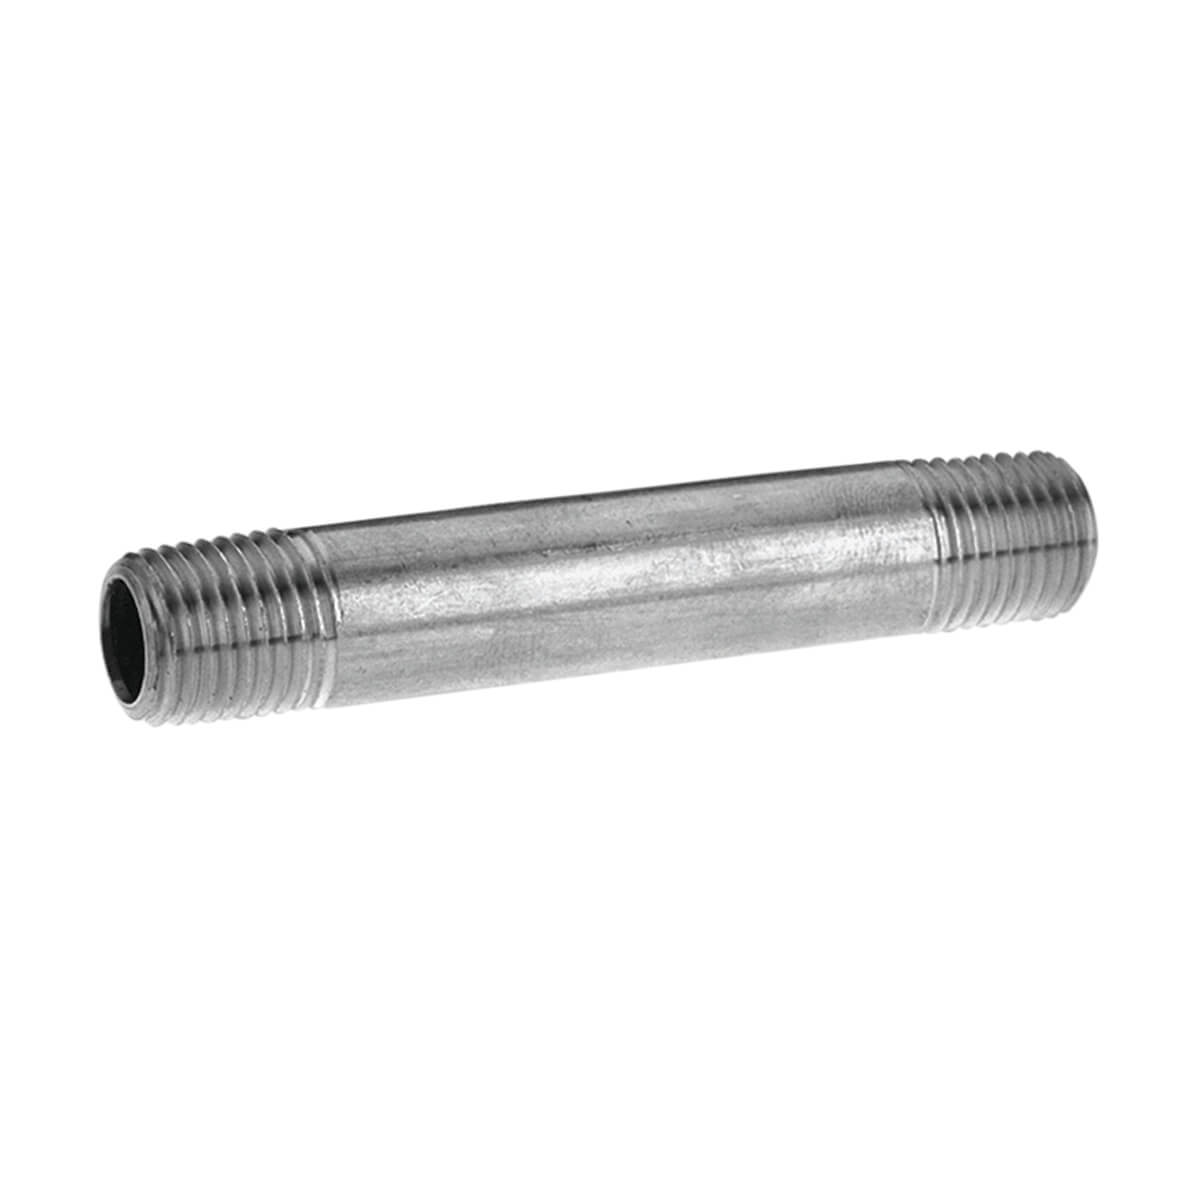 Pipe Nipple Galvanized Steel - 2-in x CLOSE